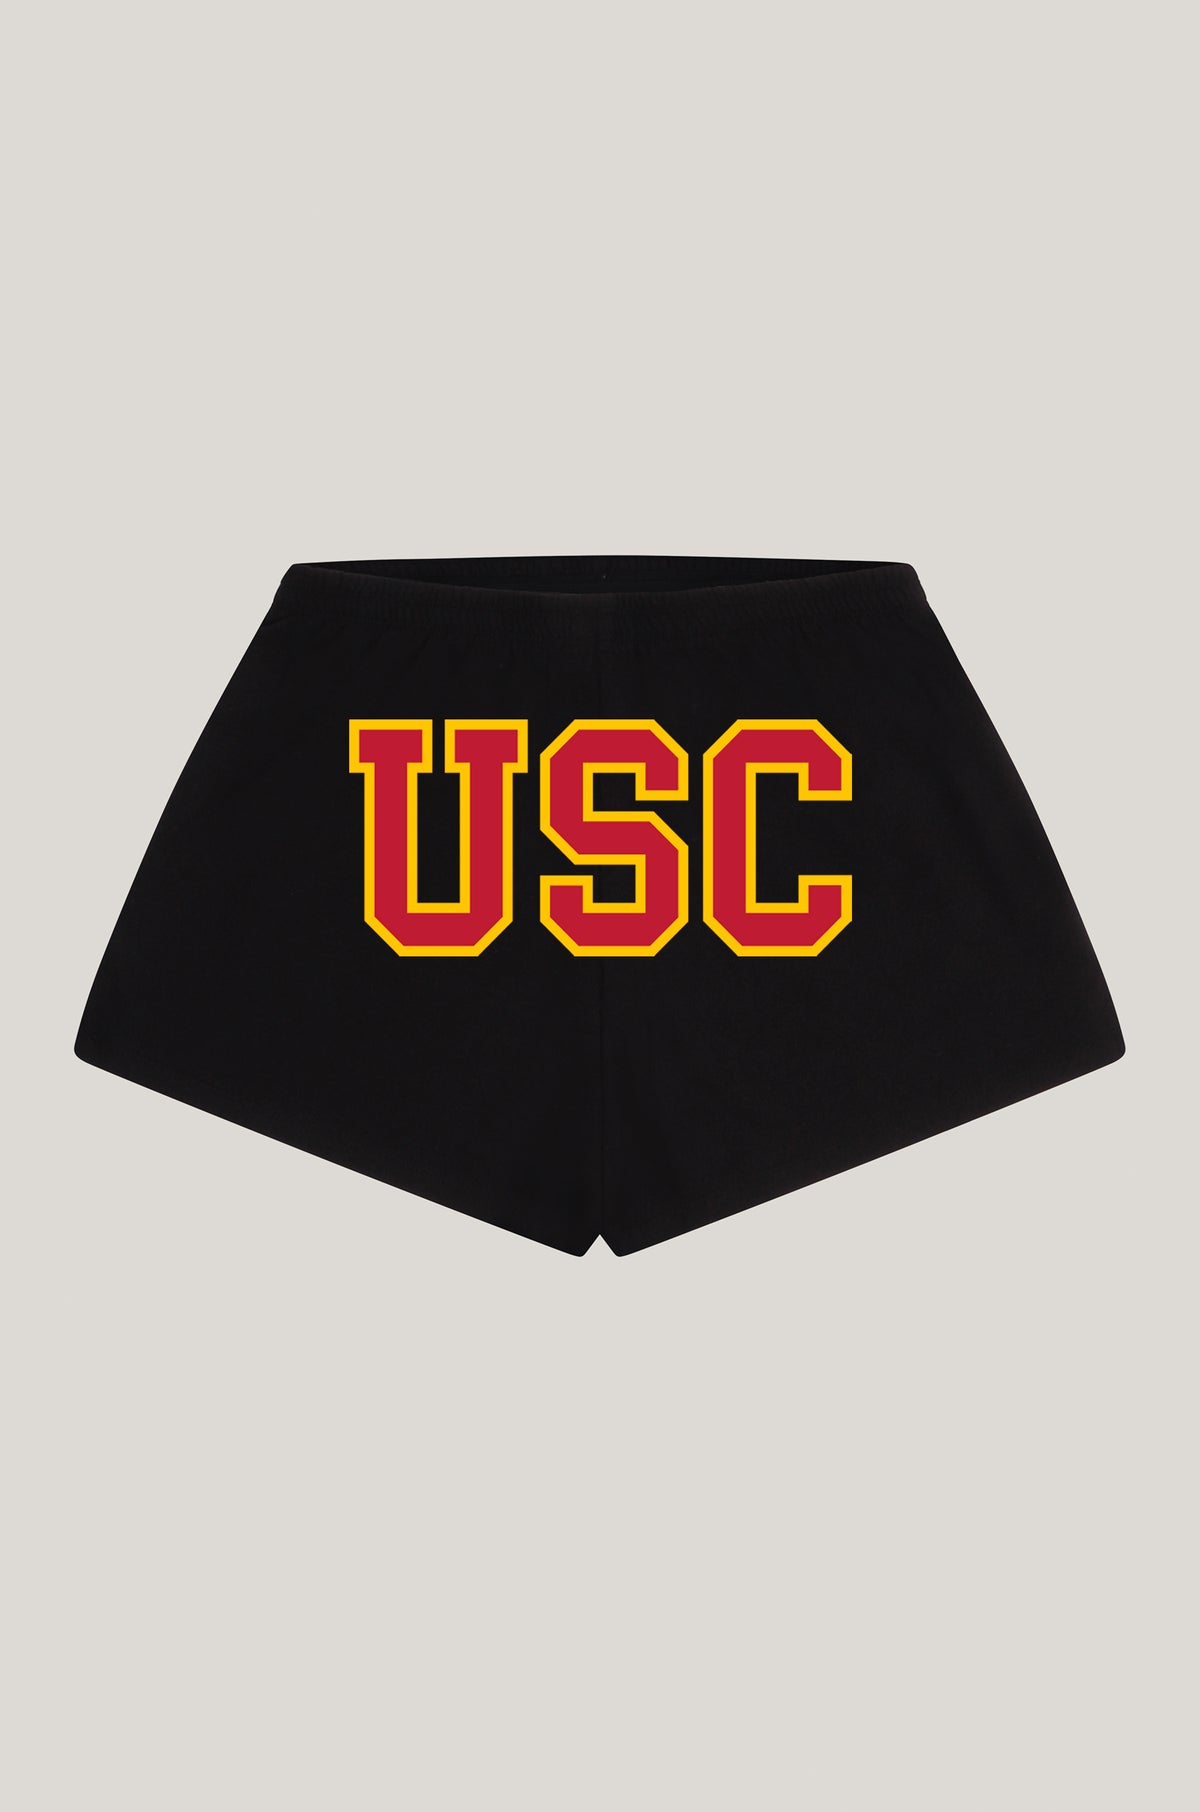 USC P.E. Shorts